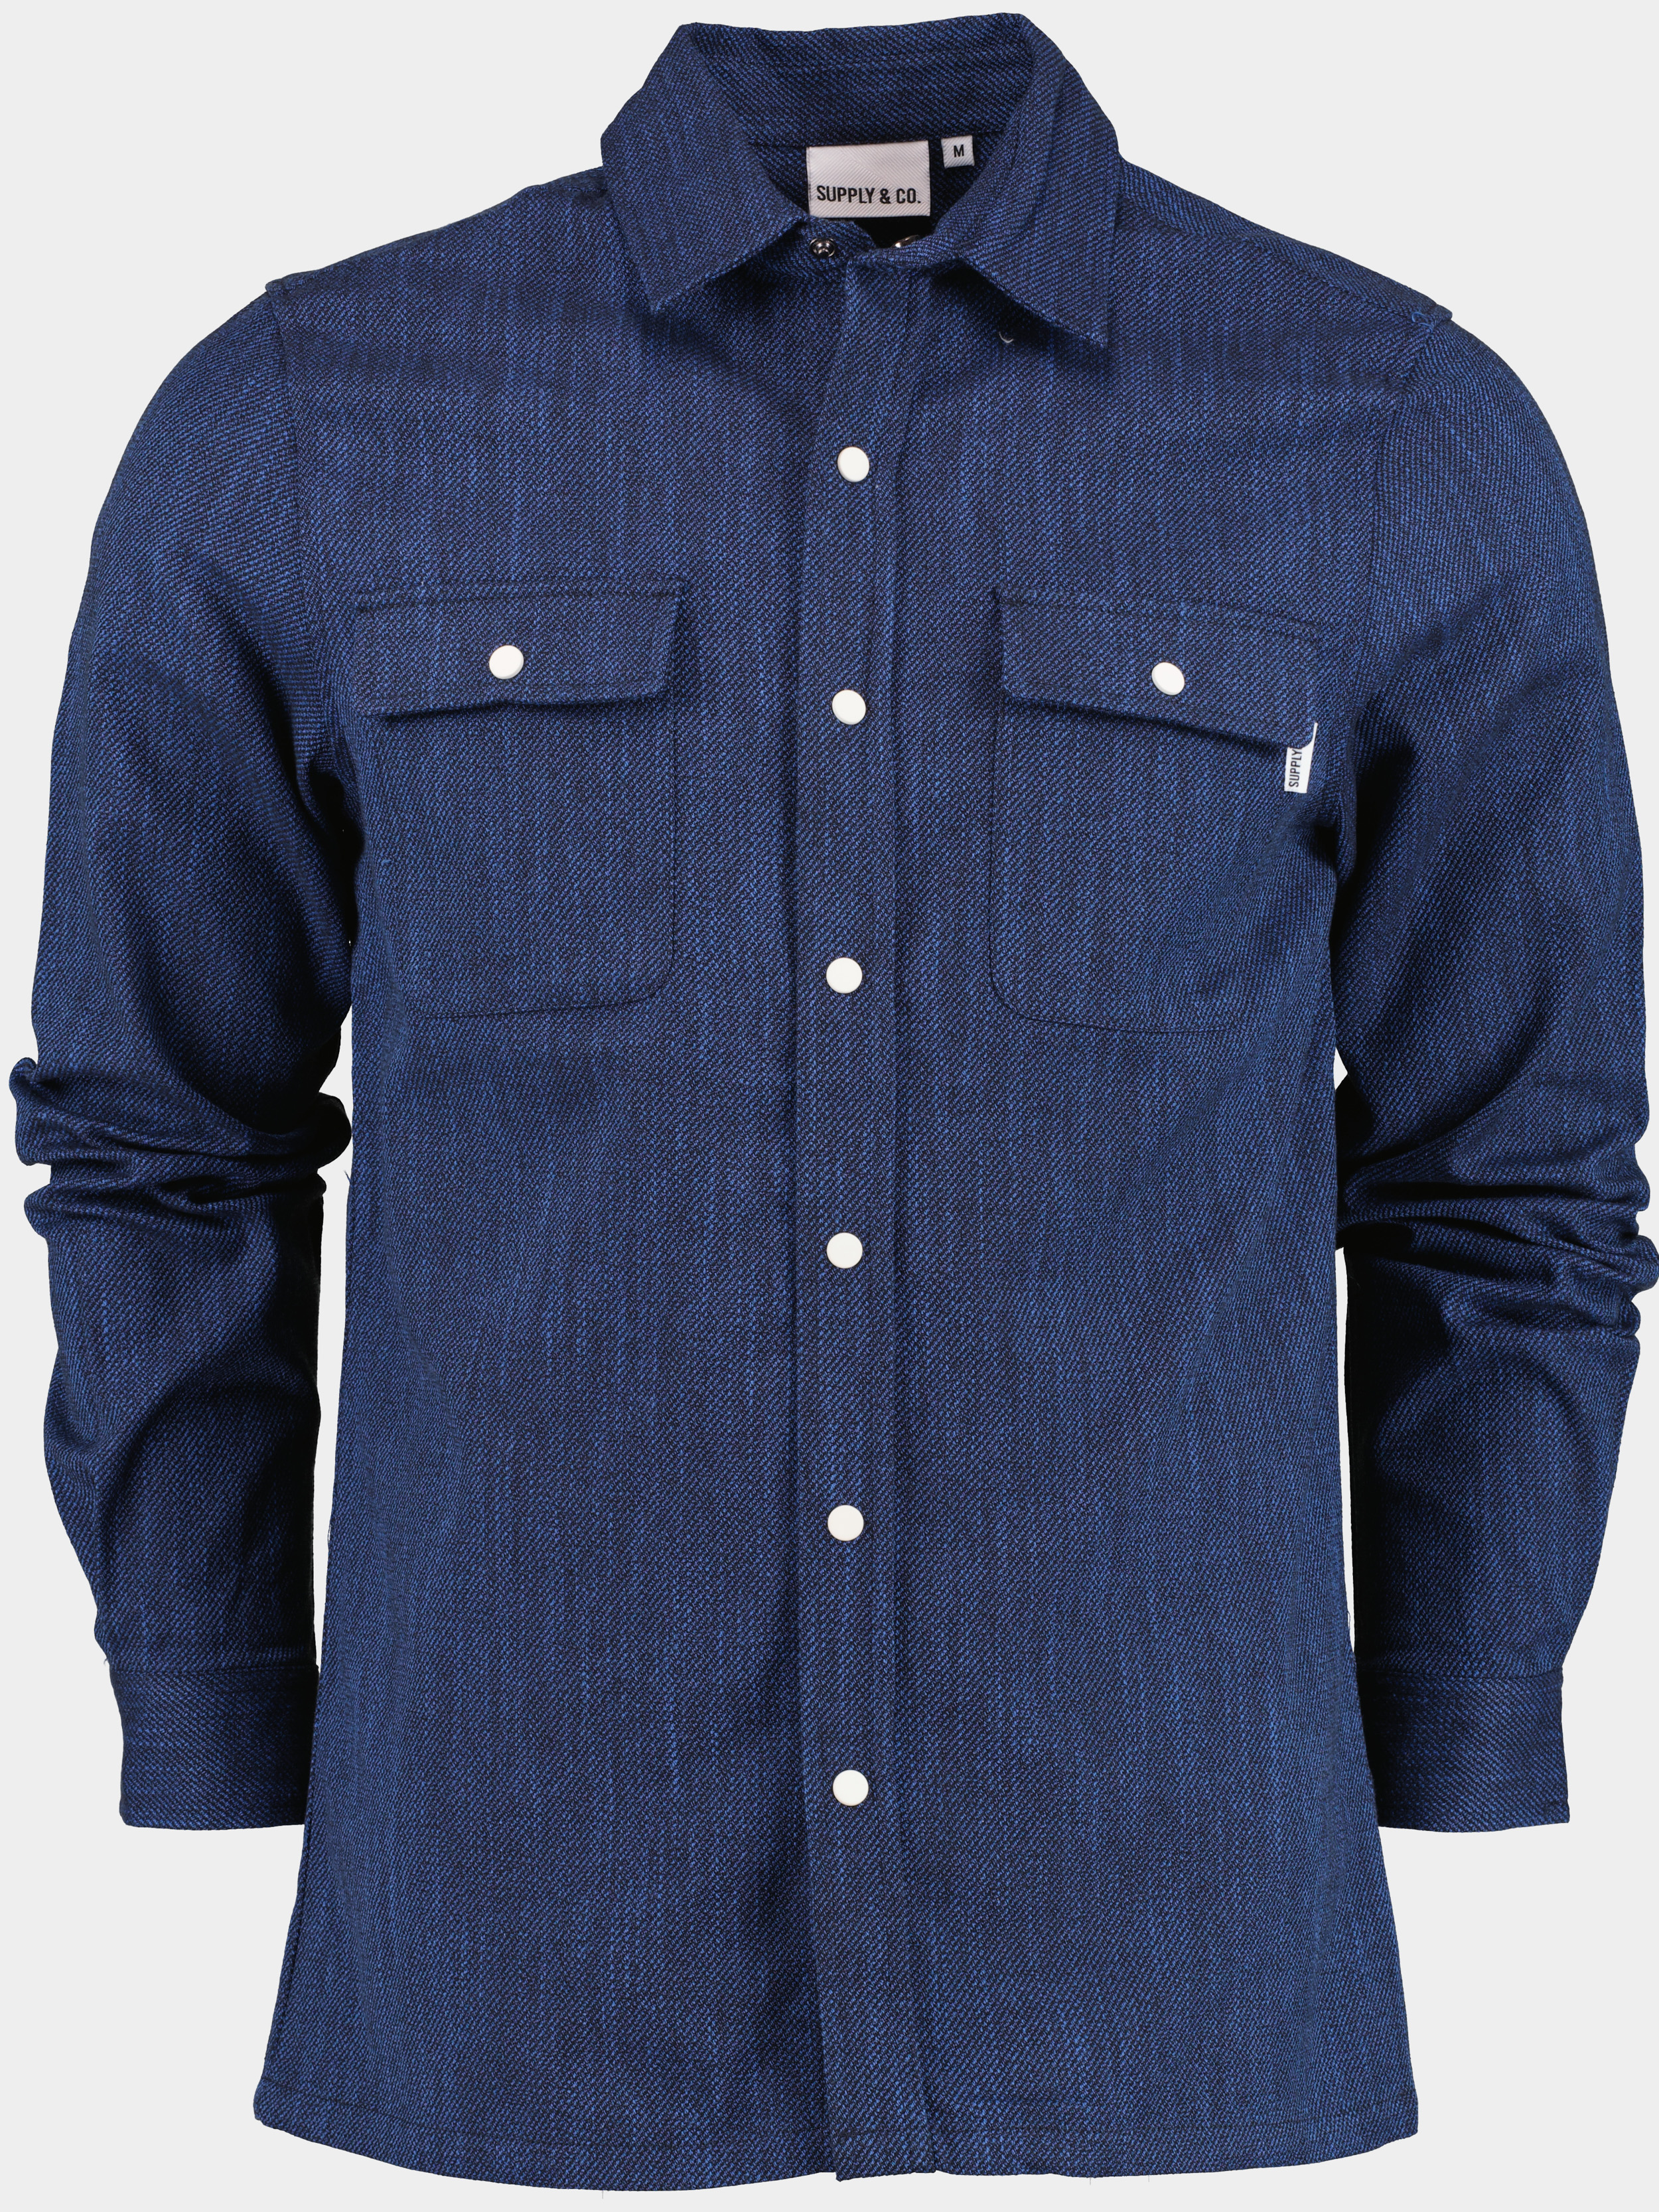 Supply & Co. Zomerjack Blauw Siv Shirtjacket 23107SI91/290 navy